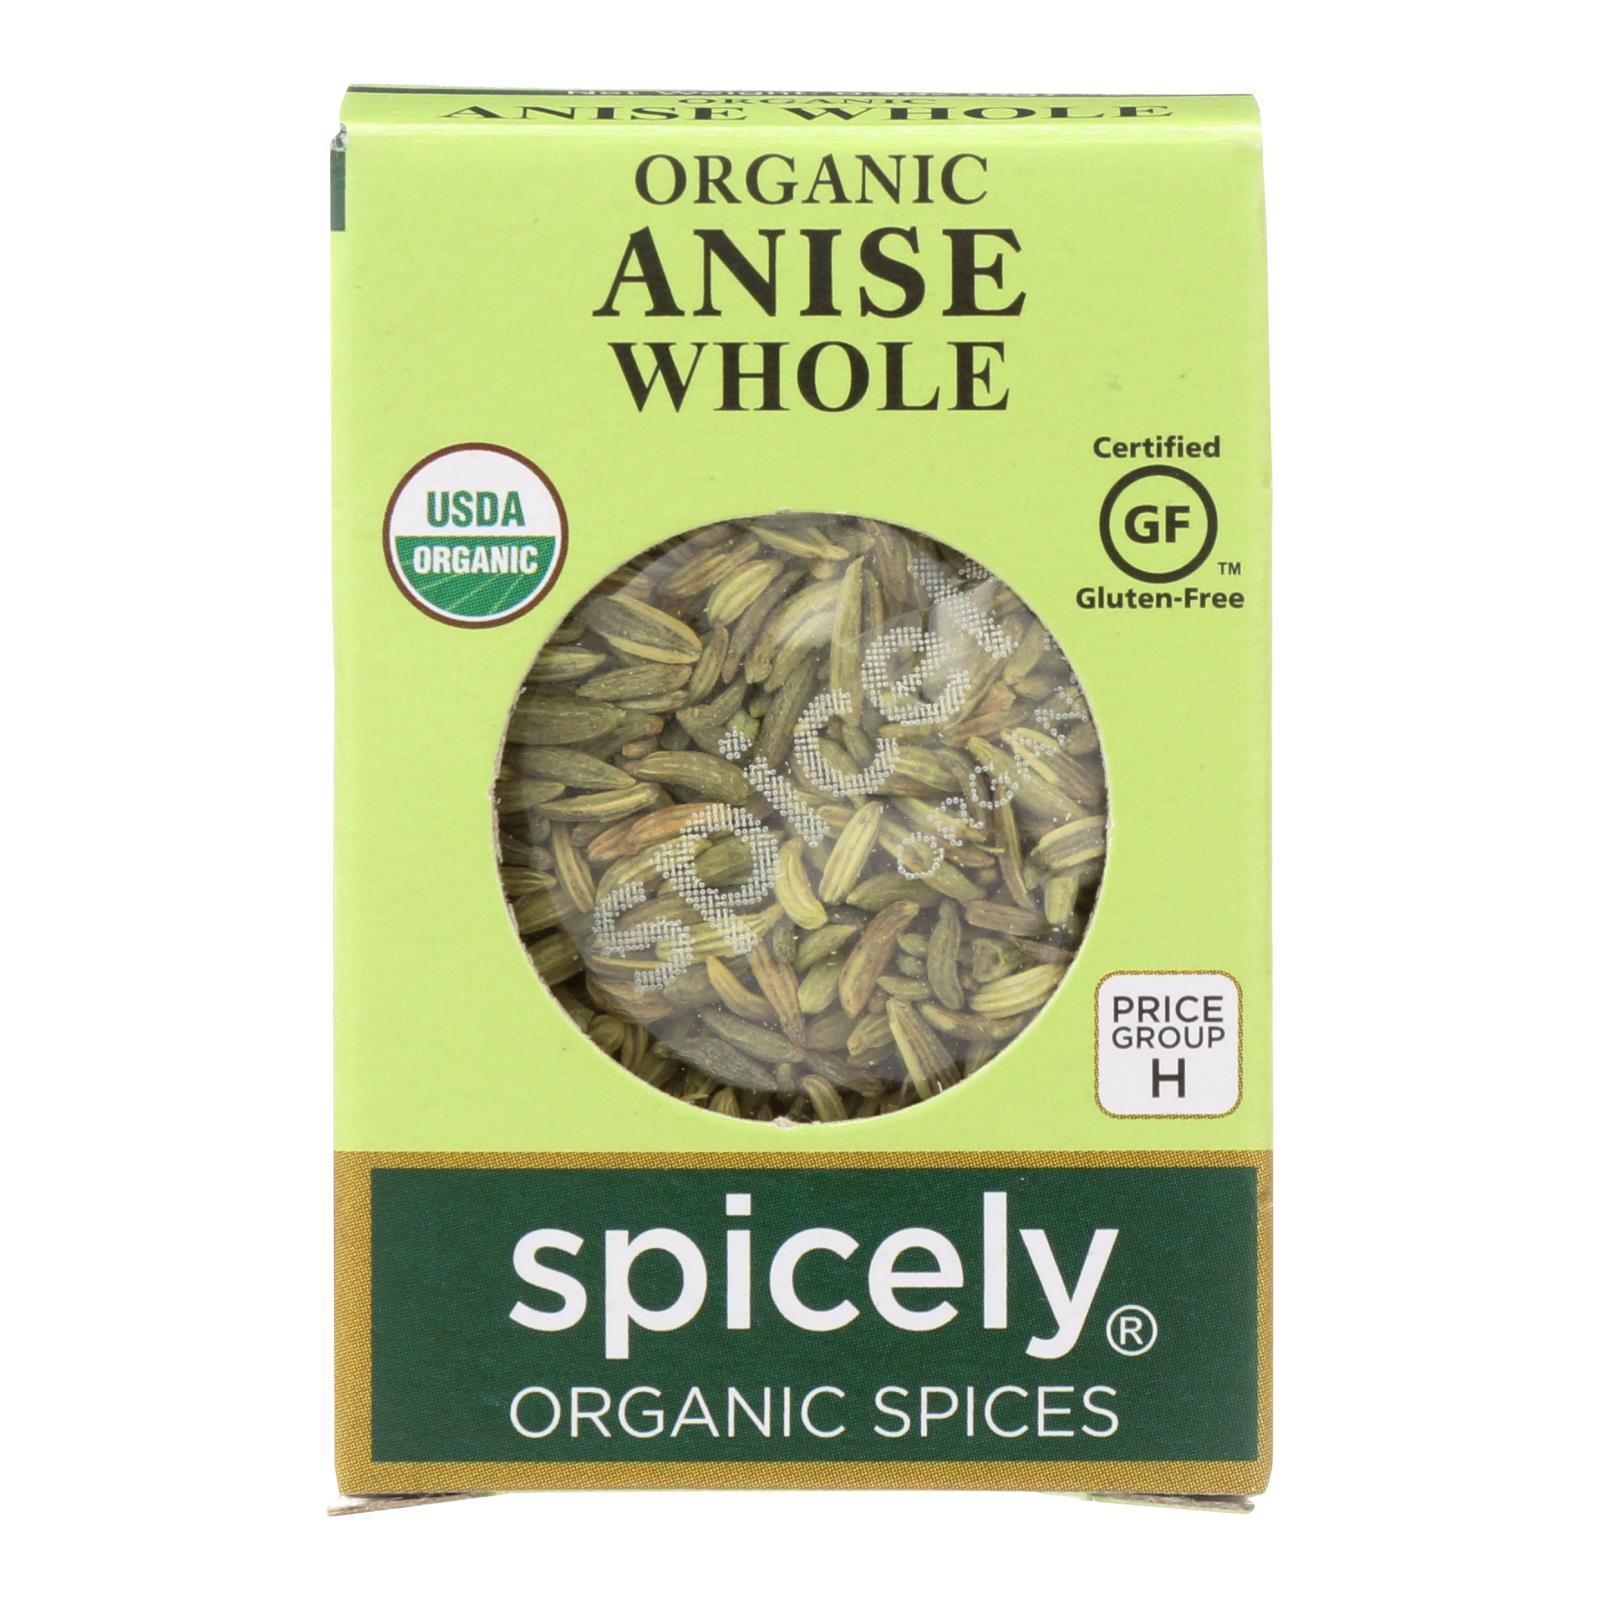 Spicely Organics - Organic Anise Whole - 6개 묶음상품 - 0.3 oz.